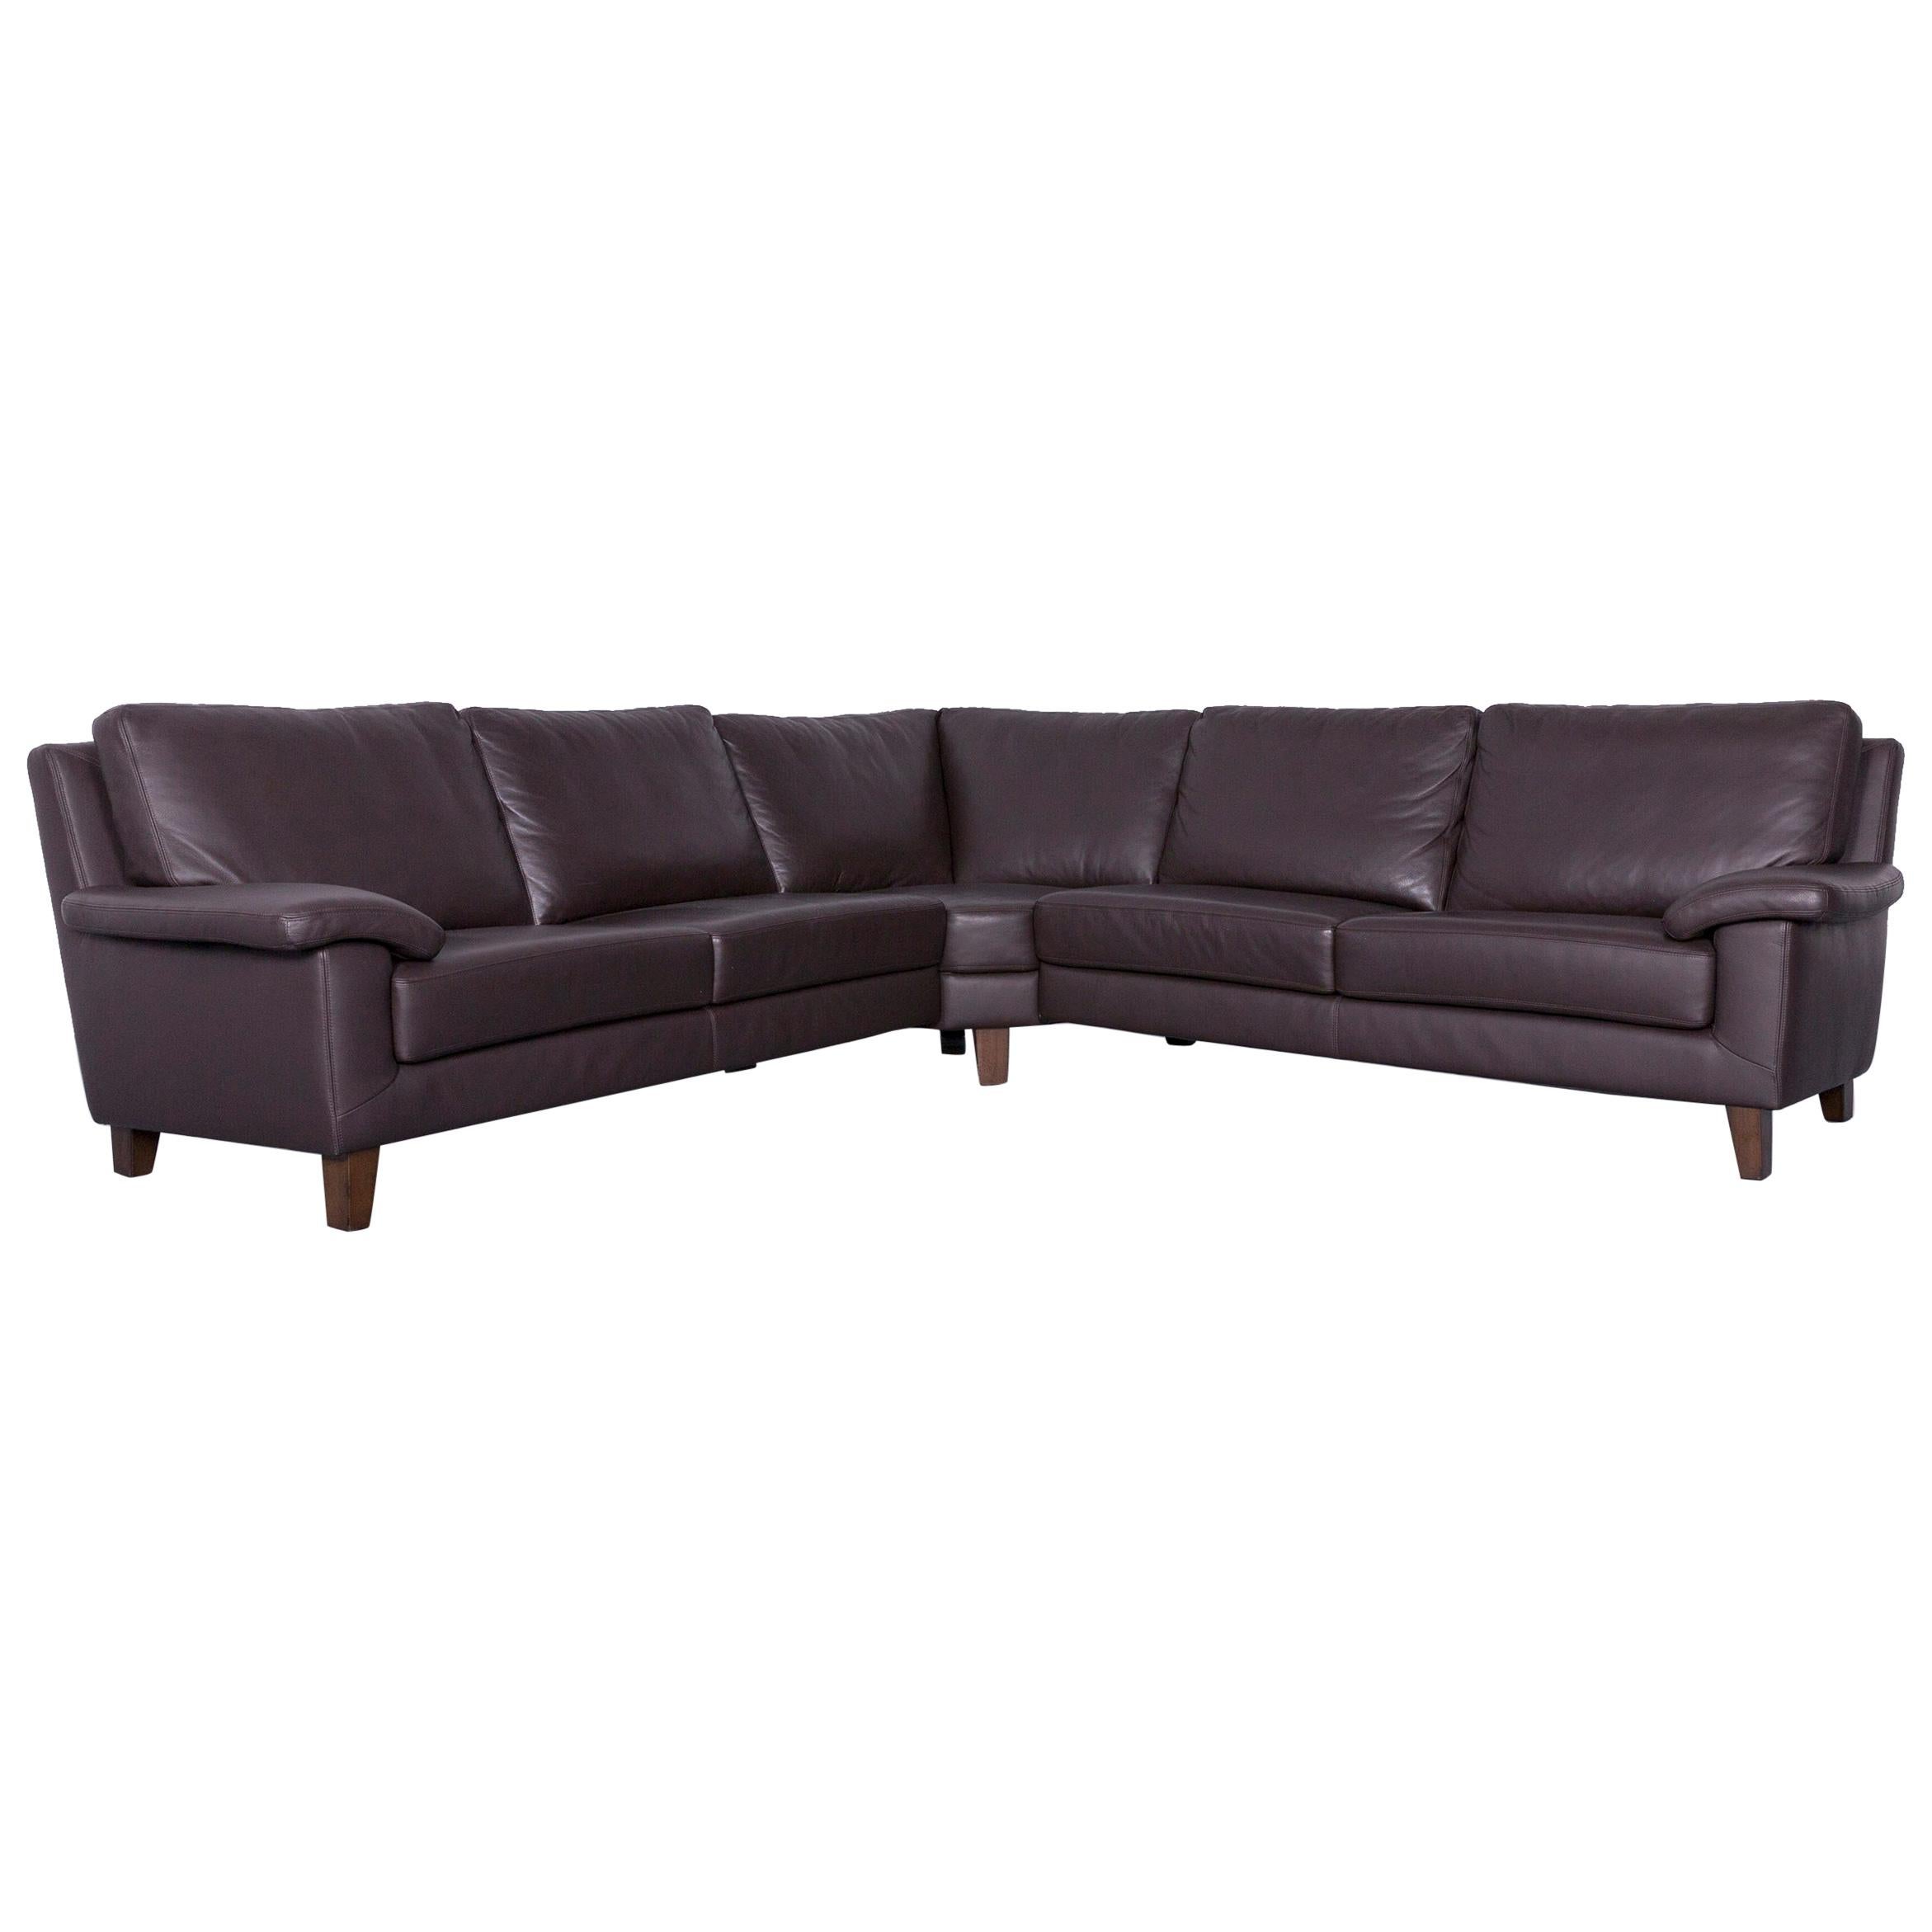 Ewald Schillig Designer Leather Corner-Sofa Brown Couch Sofa